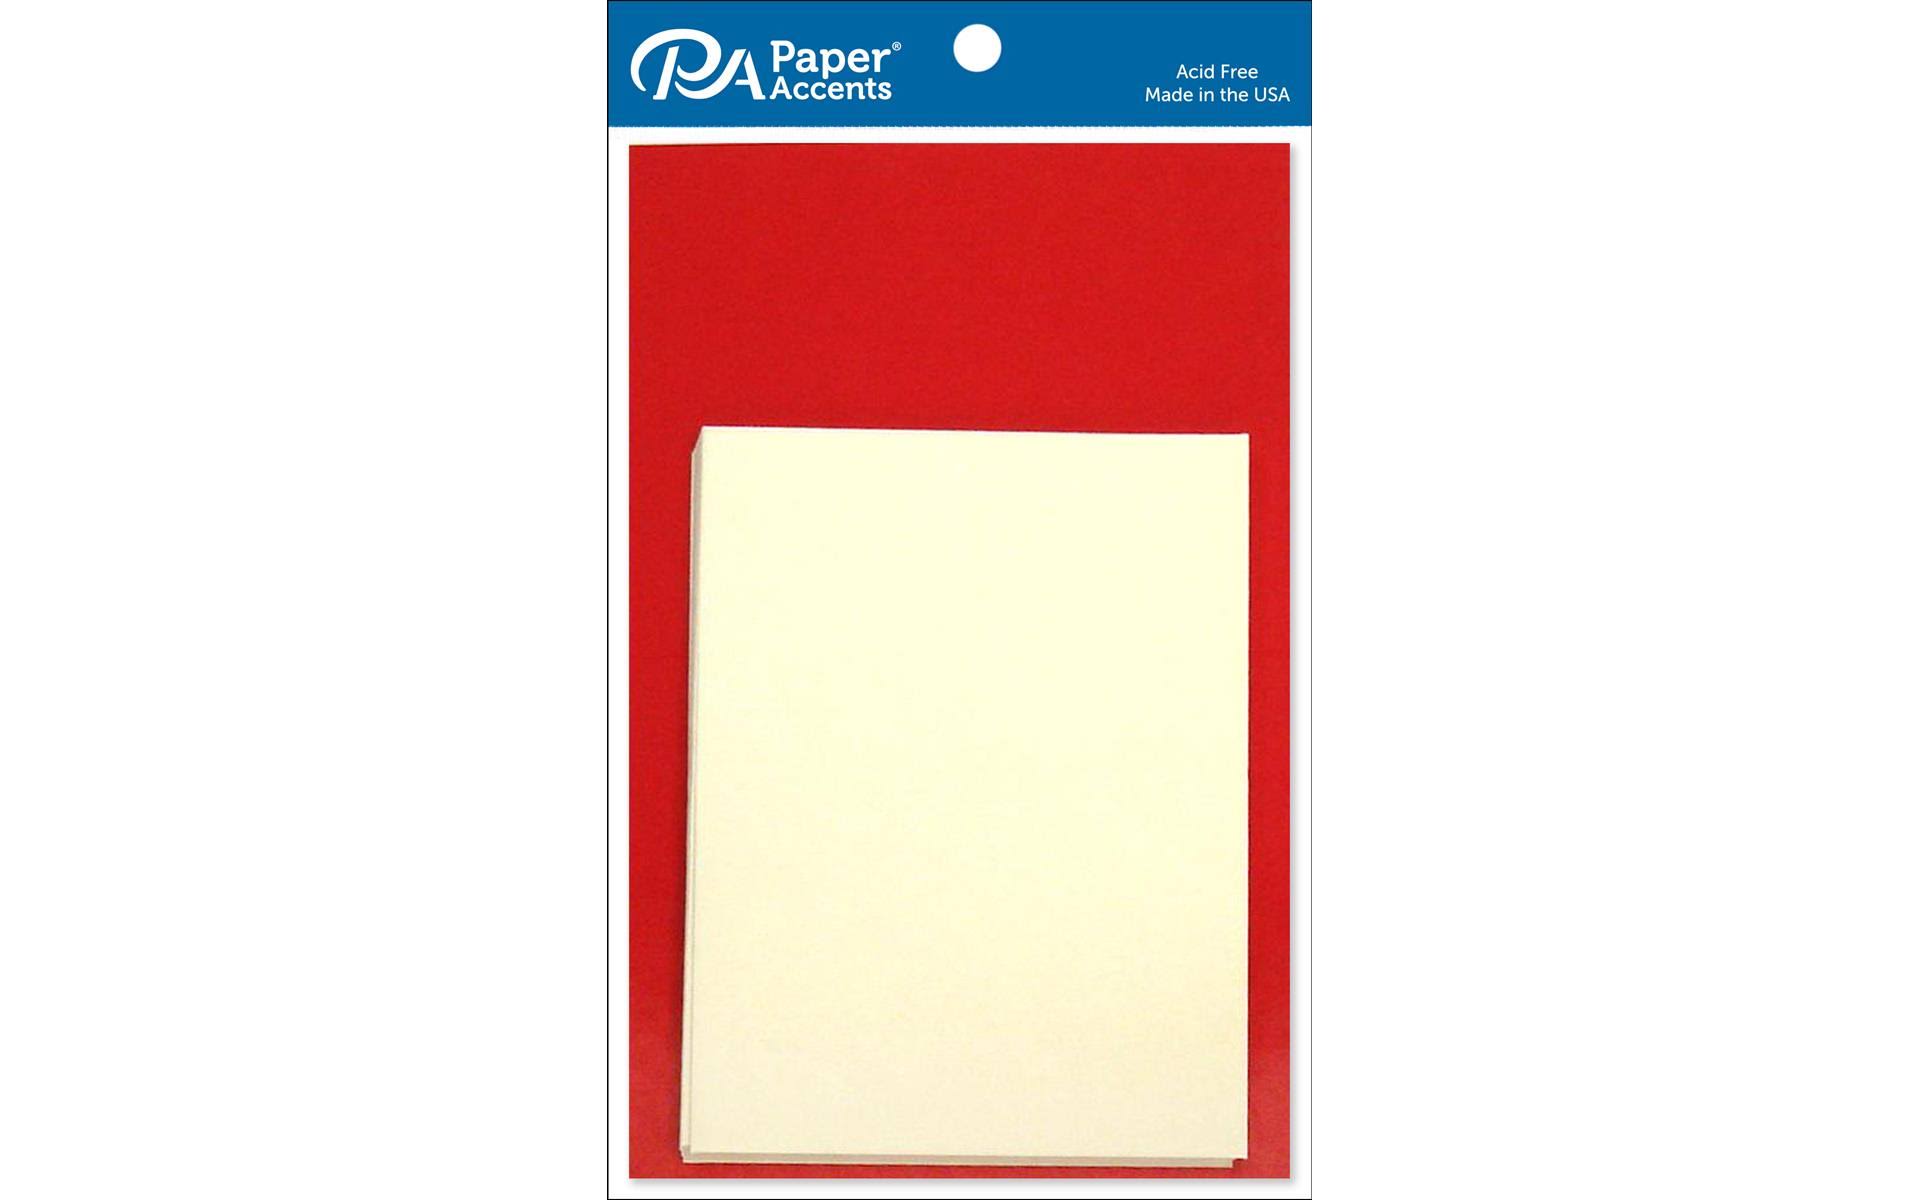 Paper Accents Card & Env 4.25x5.5 10pc Dark Red/Cream